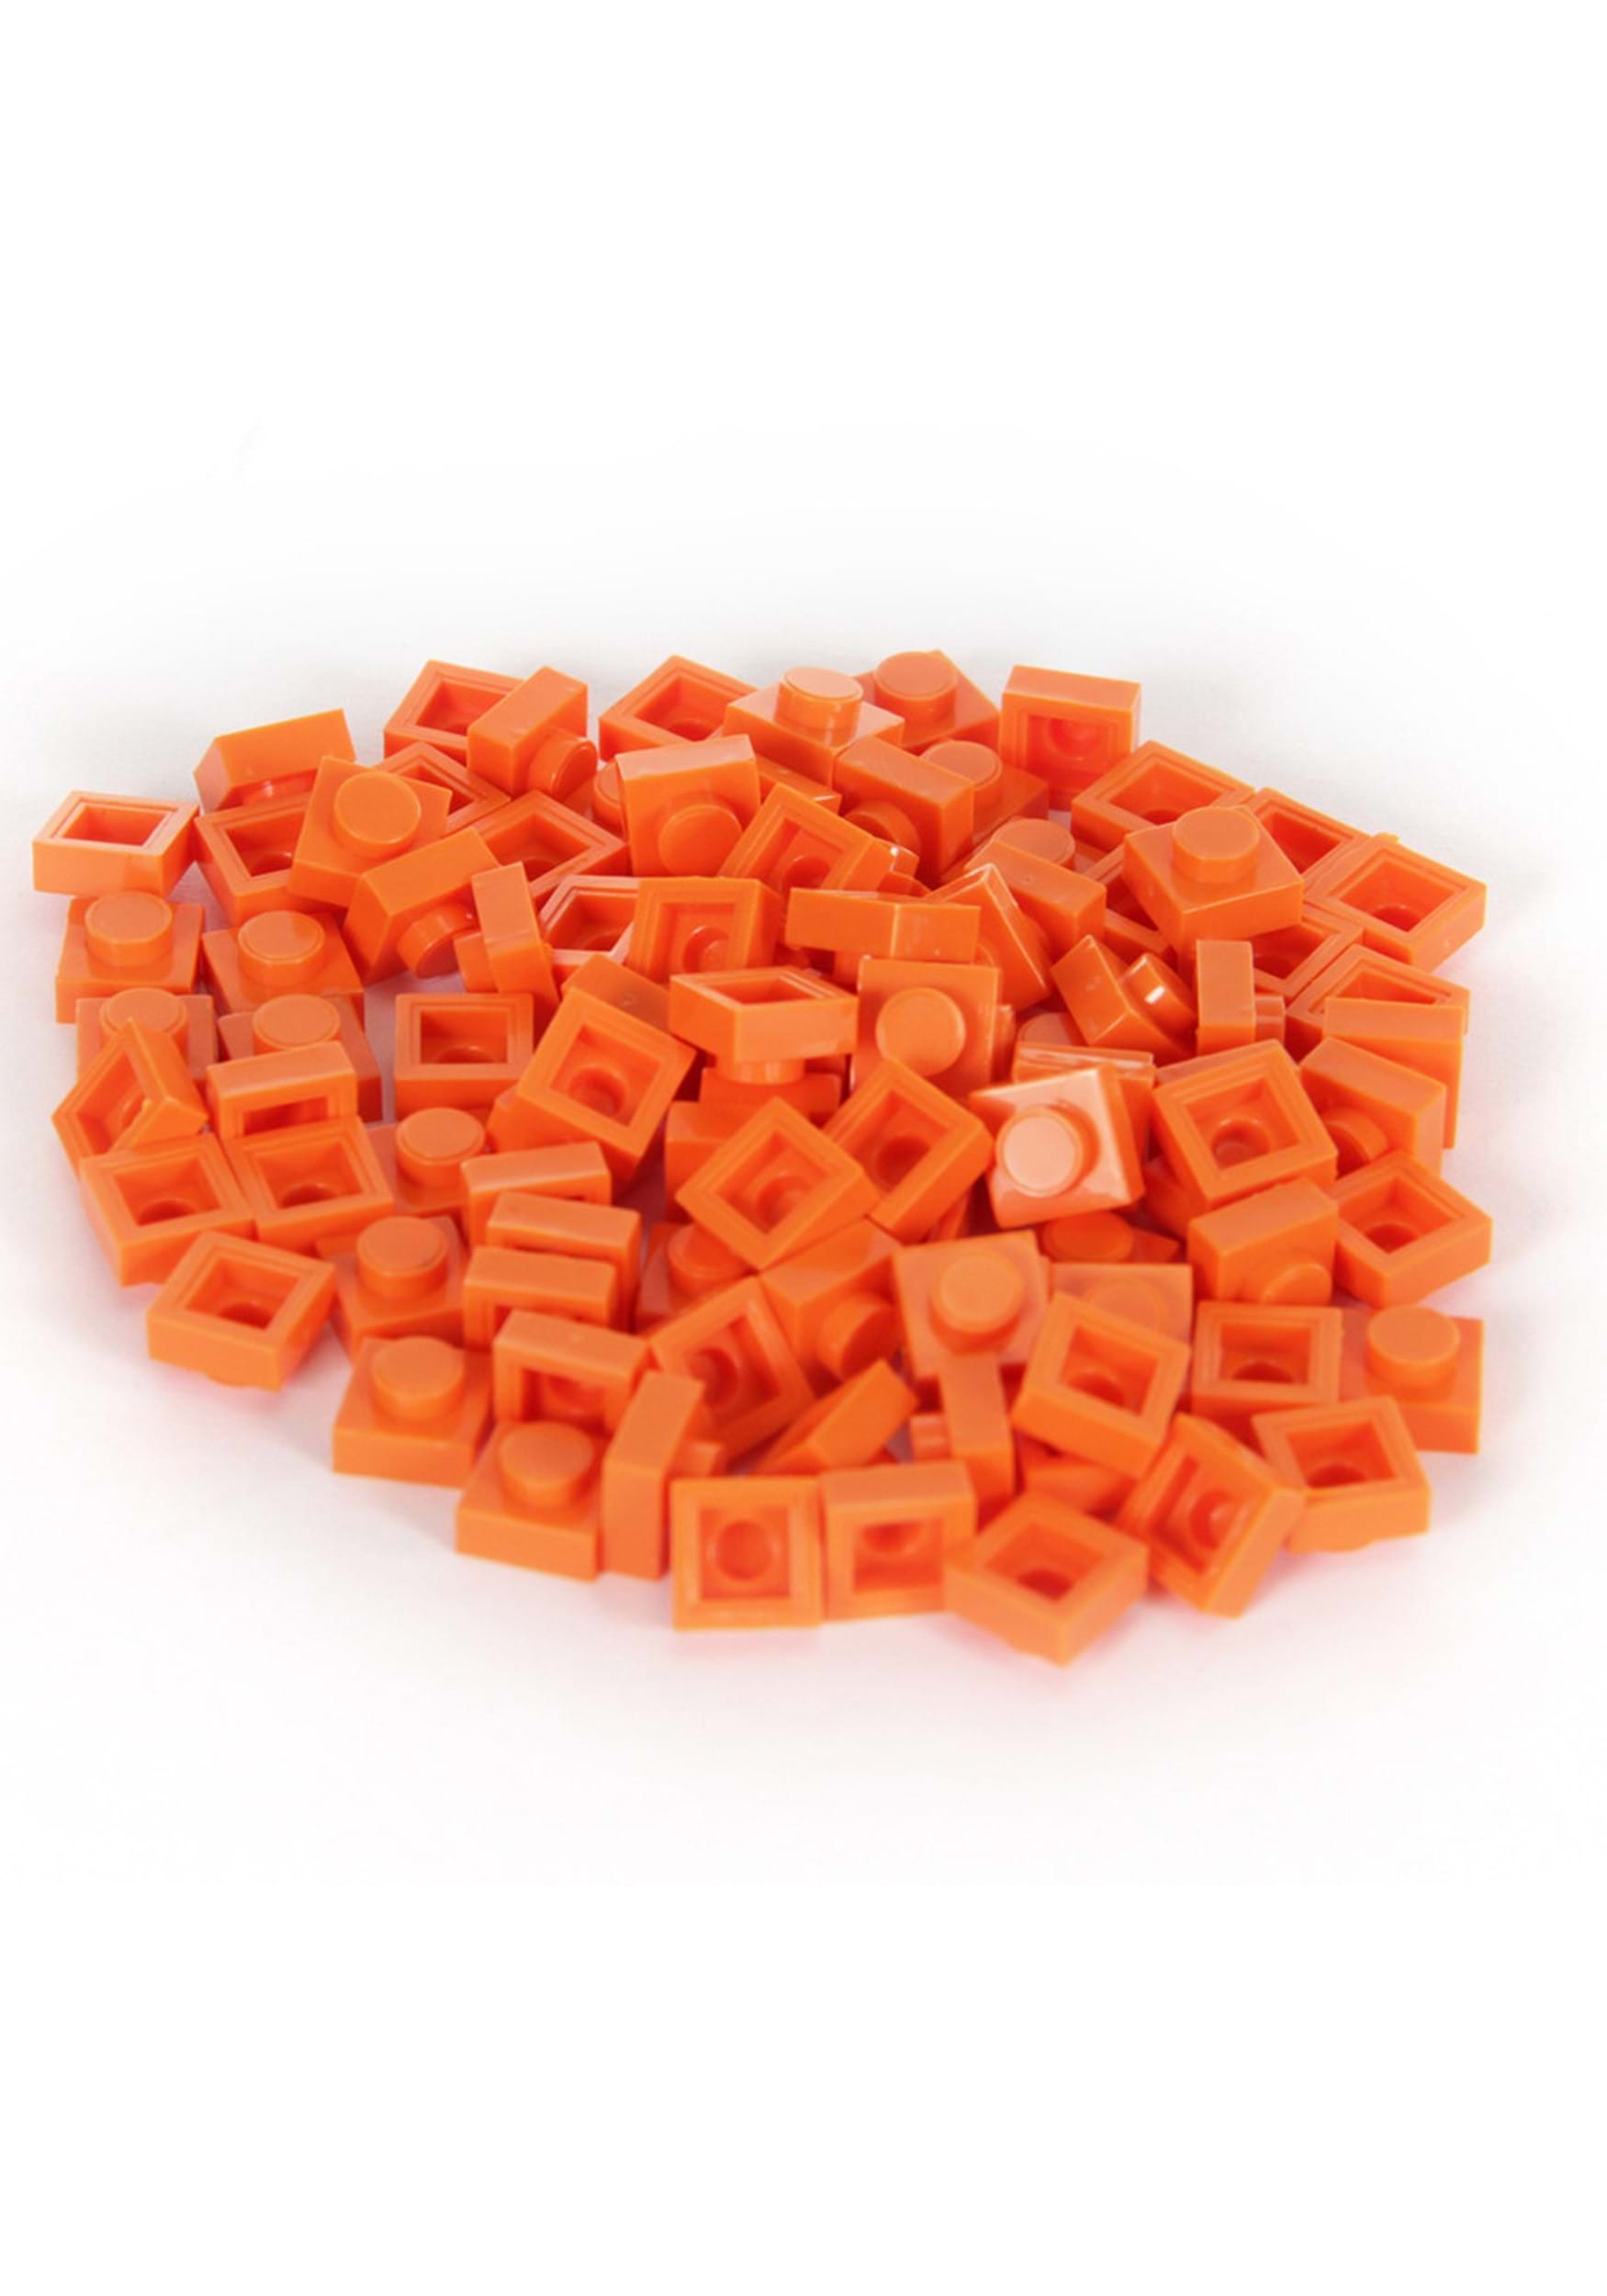 100 Orange Bricky Blocks Pieces 1x1